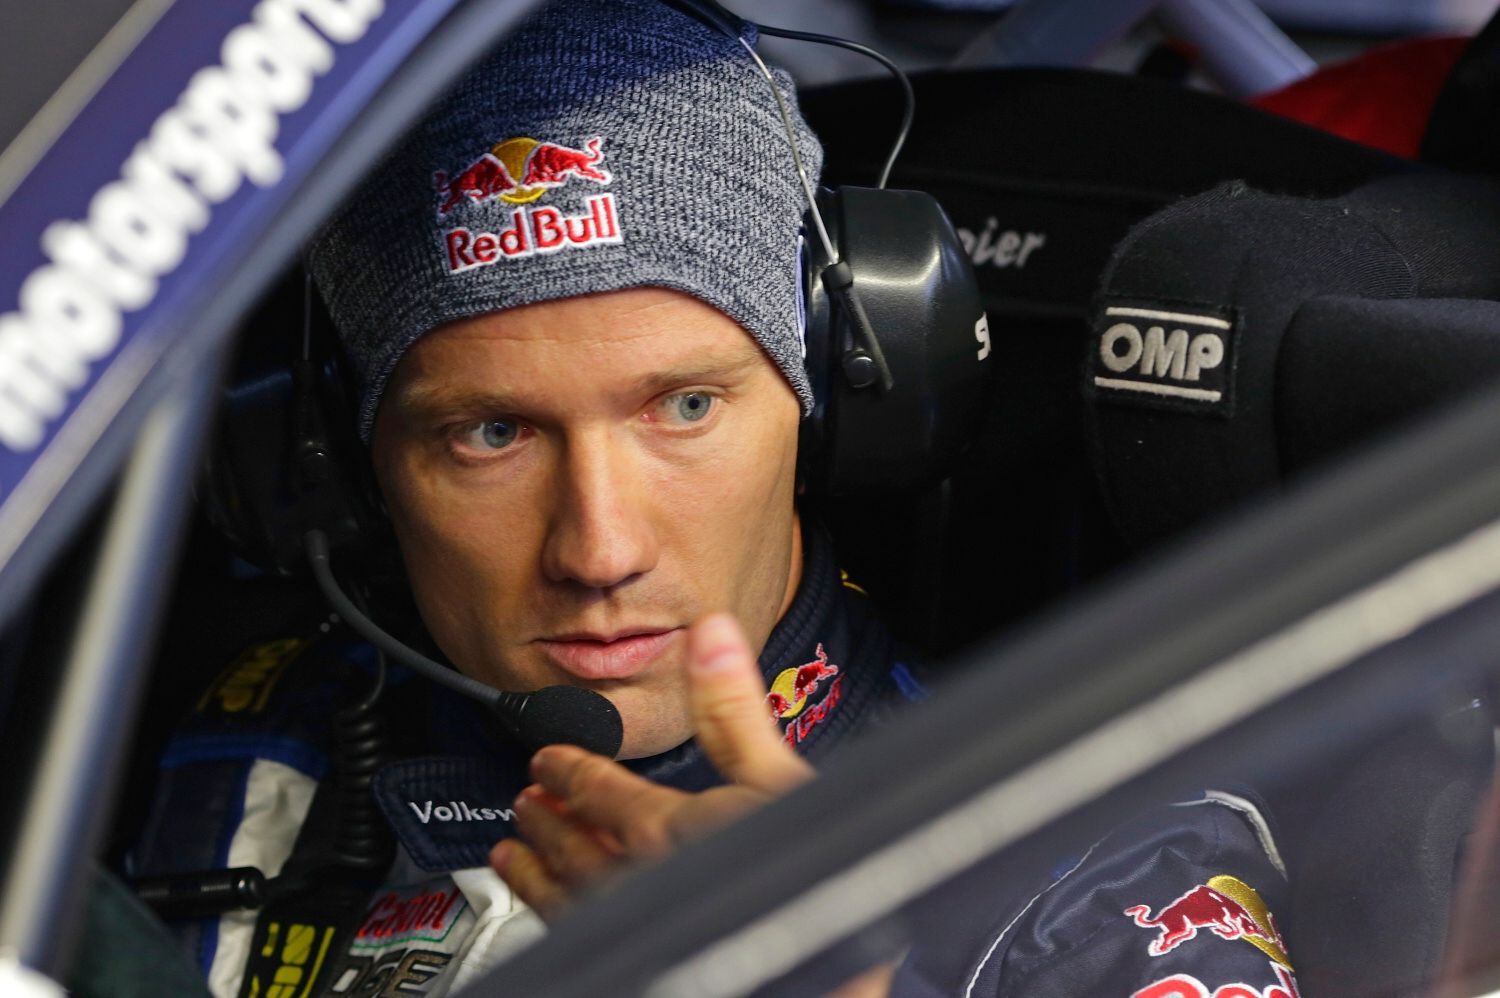 Rallye Monte Carlo 2015: Sébastien Ogier, VW Polo R WRC, shakedown